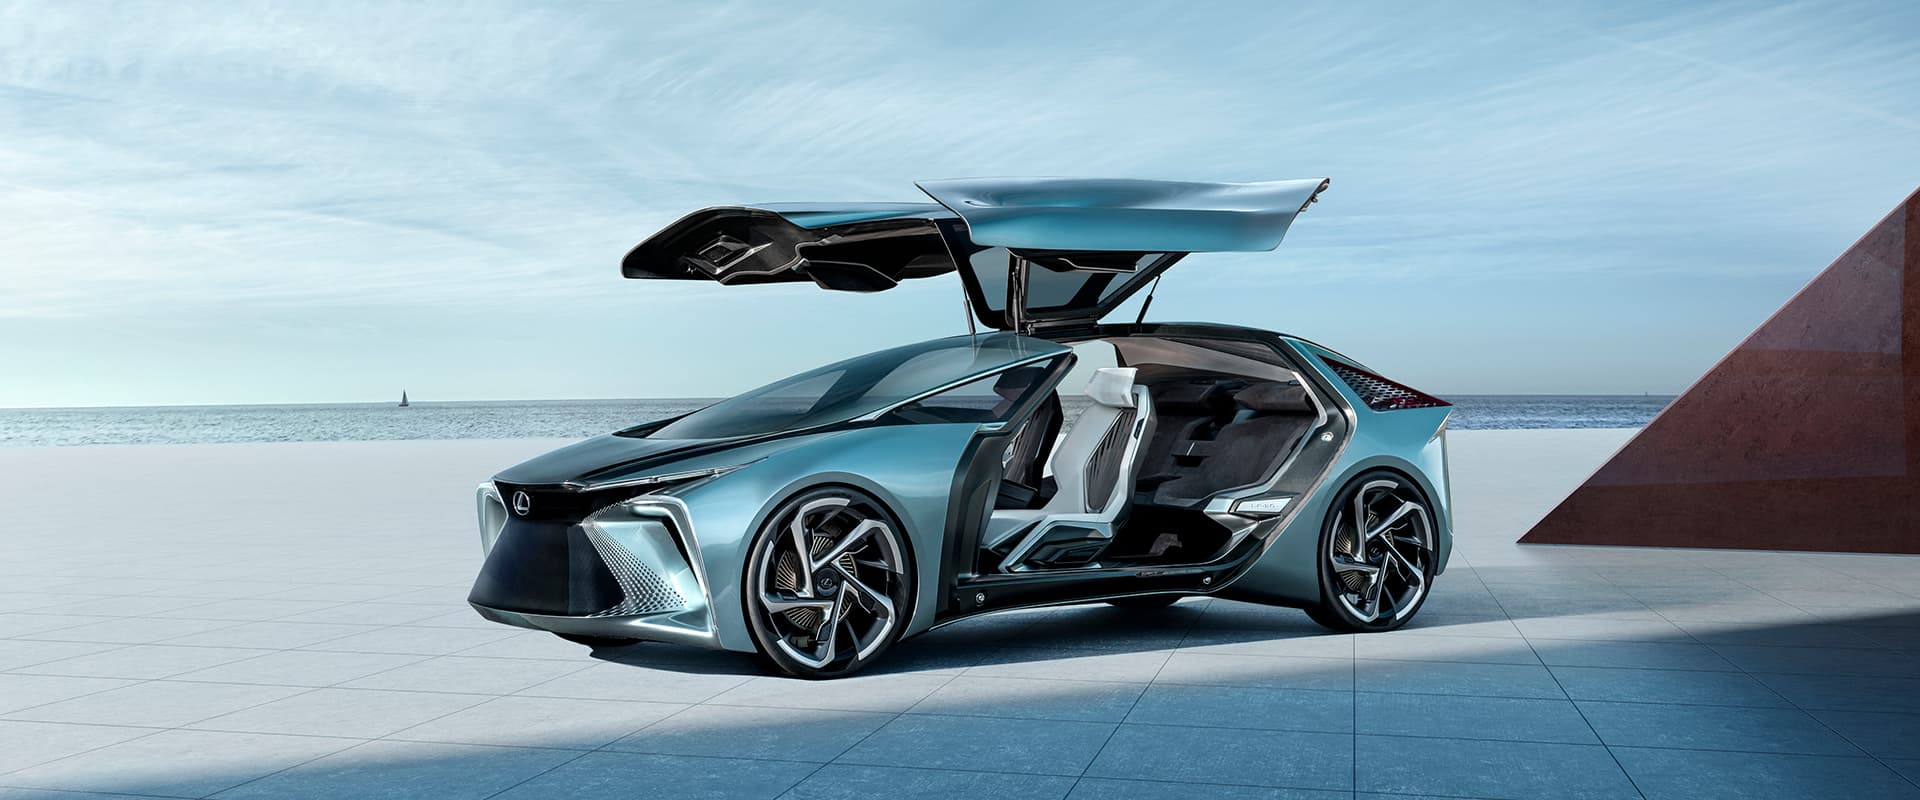 Future and Concept Cars | LF-30 | Lexus India